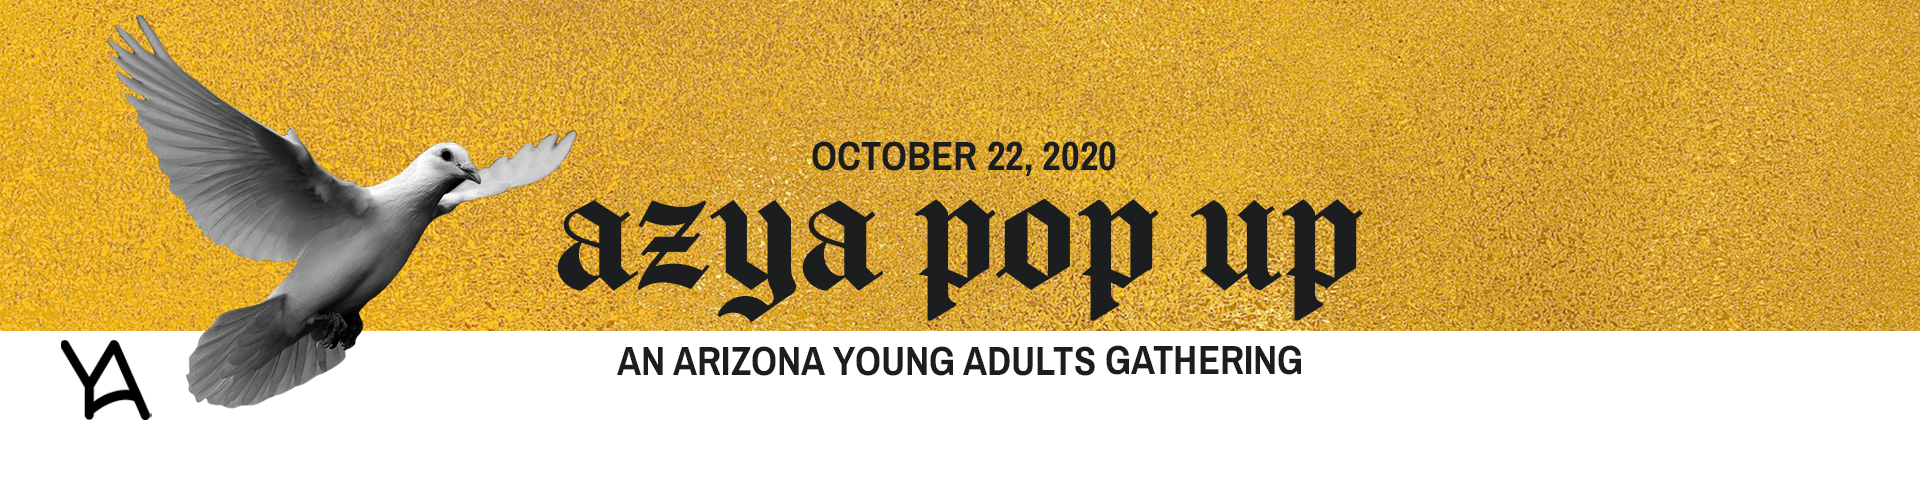 YA Pop Up Fall 2020